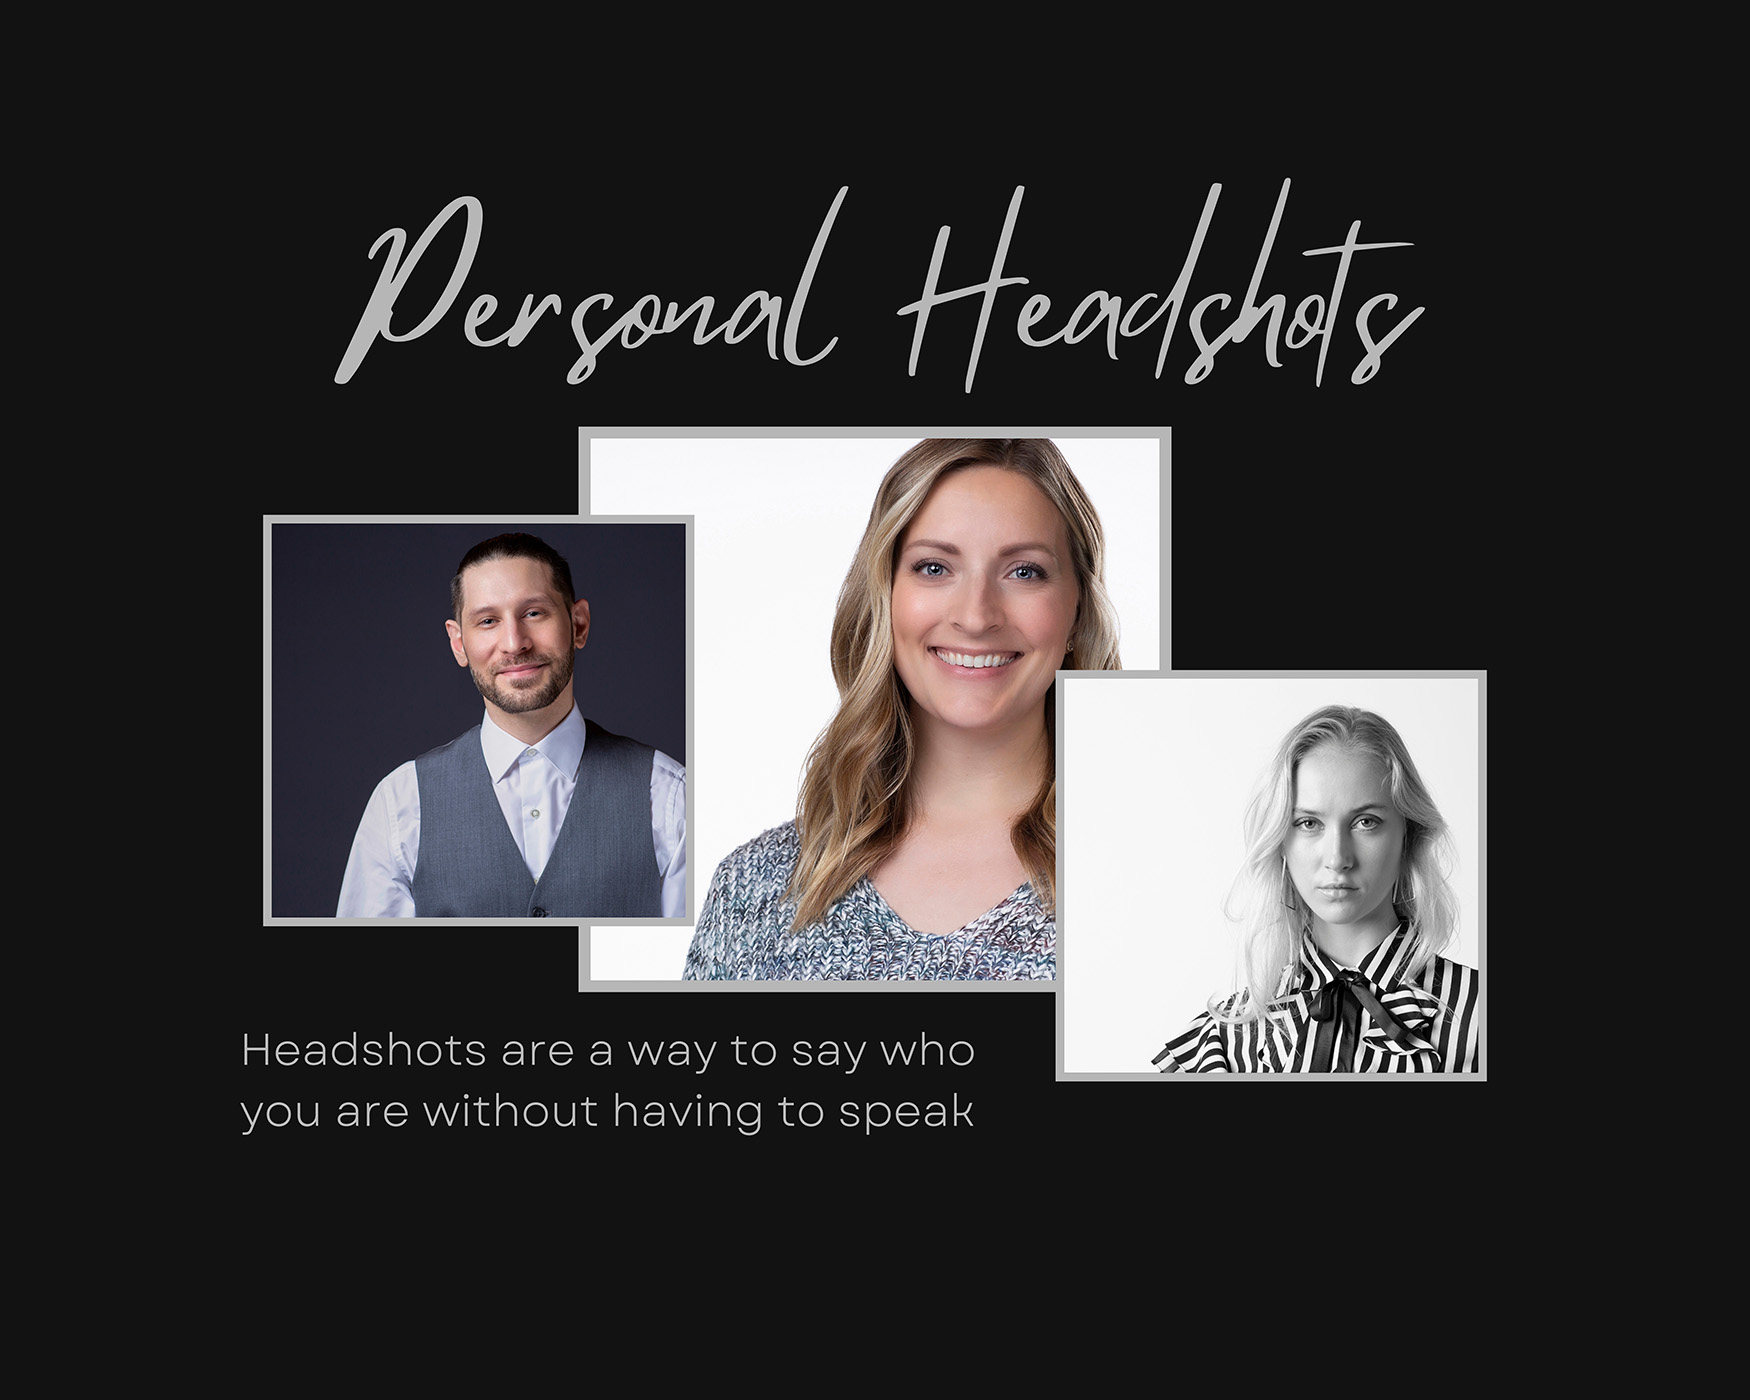 Personal Headshots or Professional Portraits